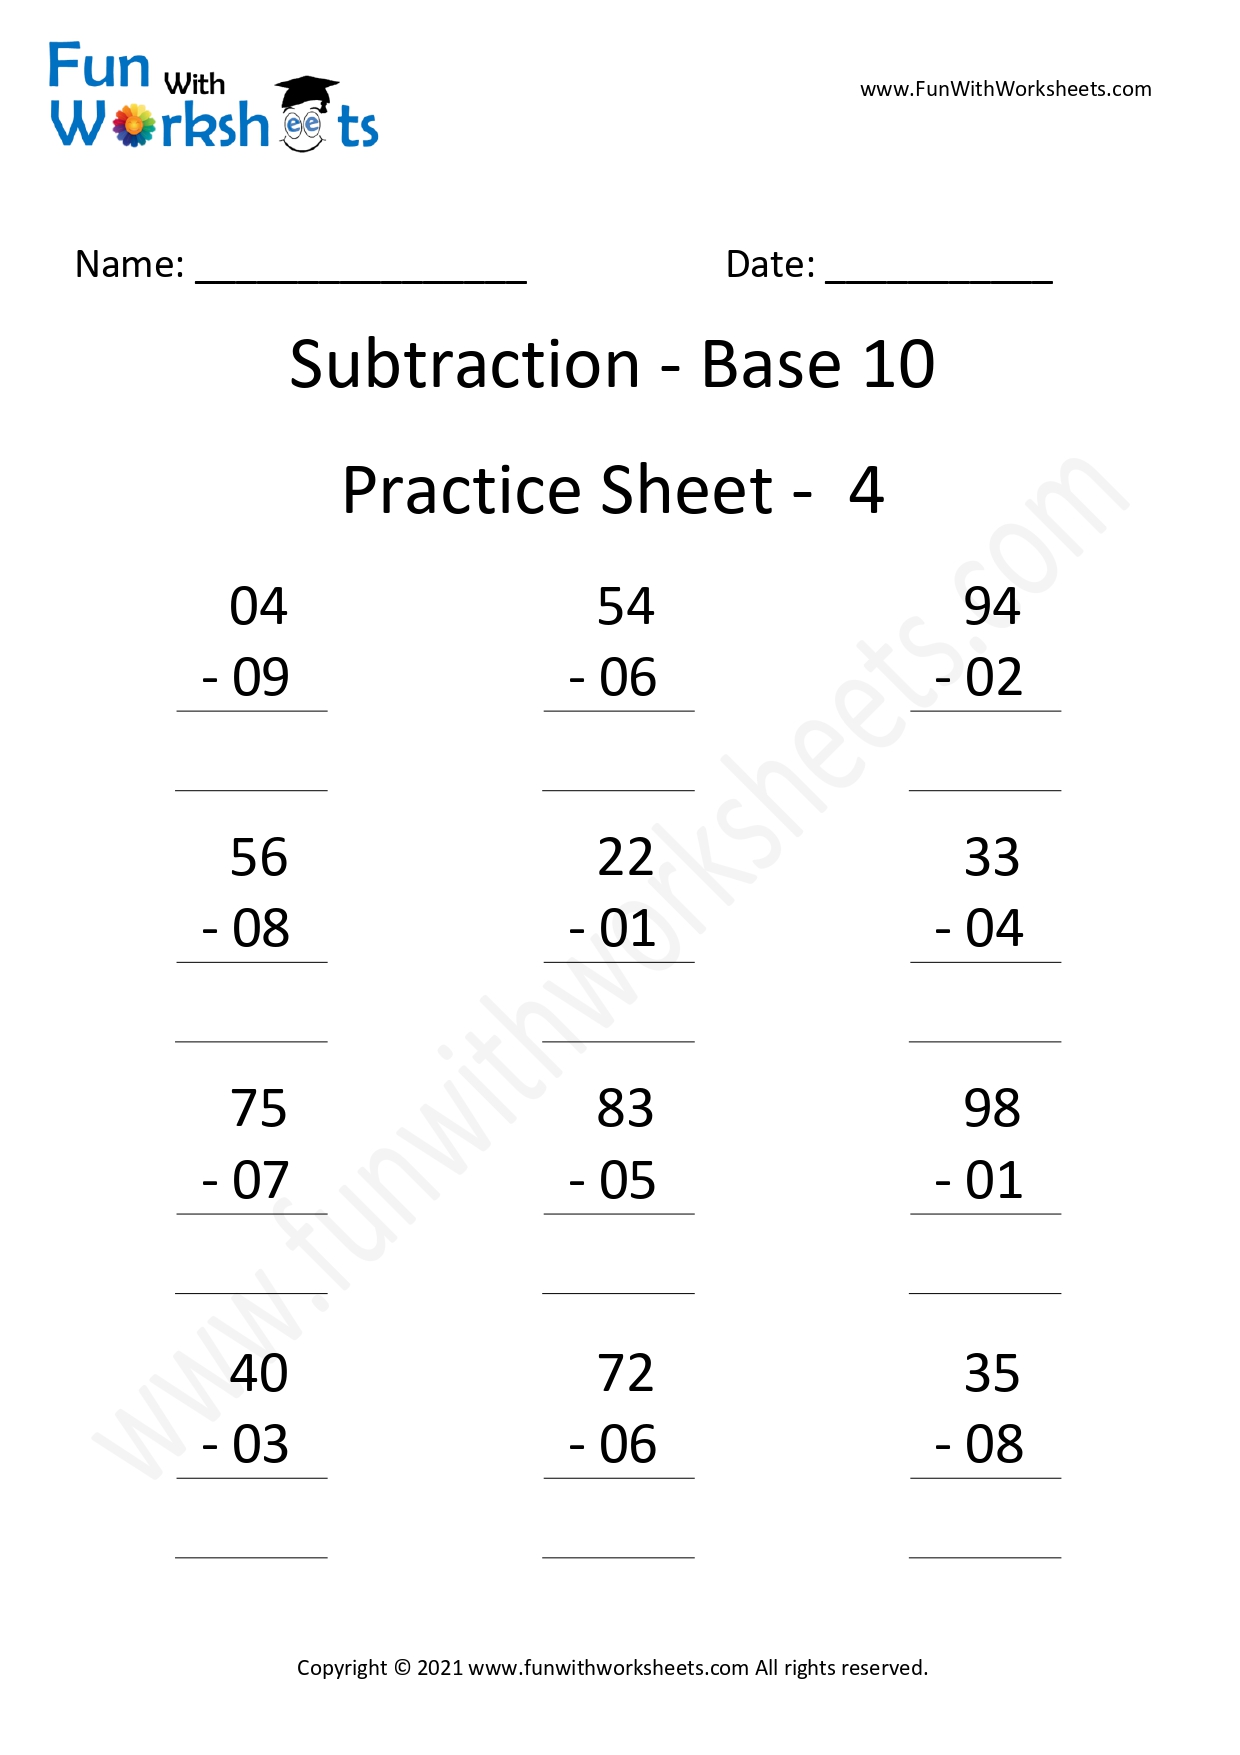 subtraction-base-10-practice-worksheet-4-free-printable-worksheets